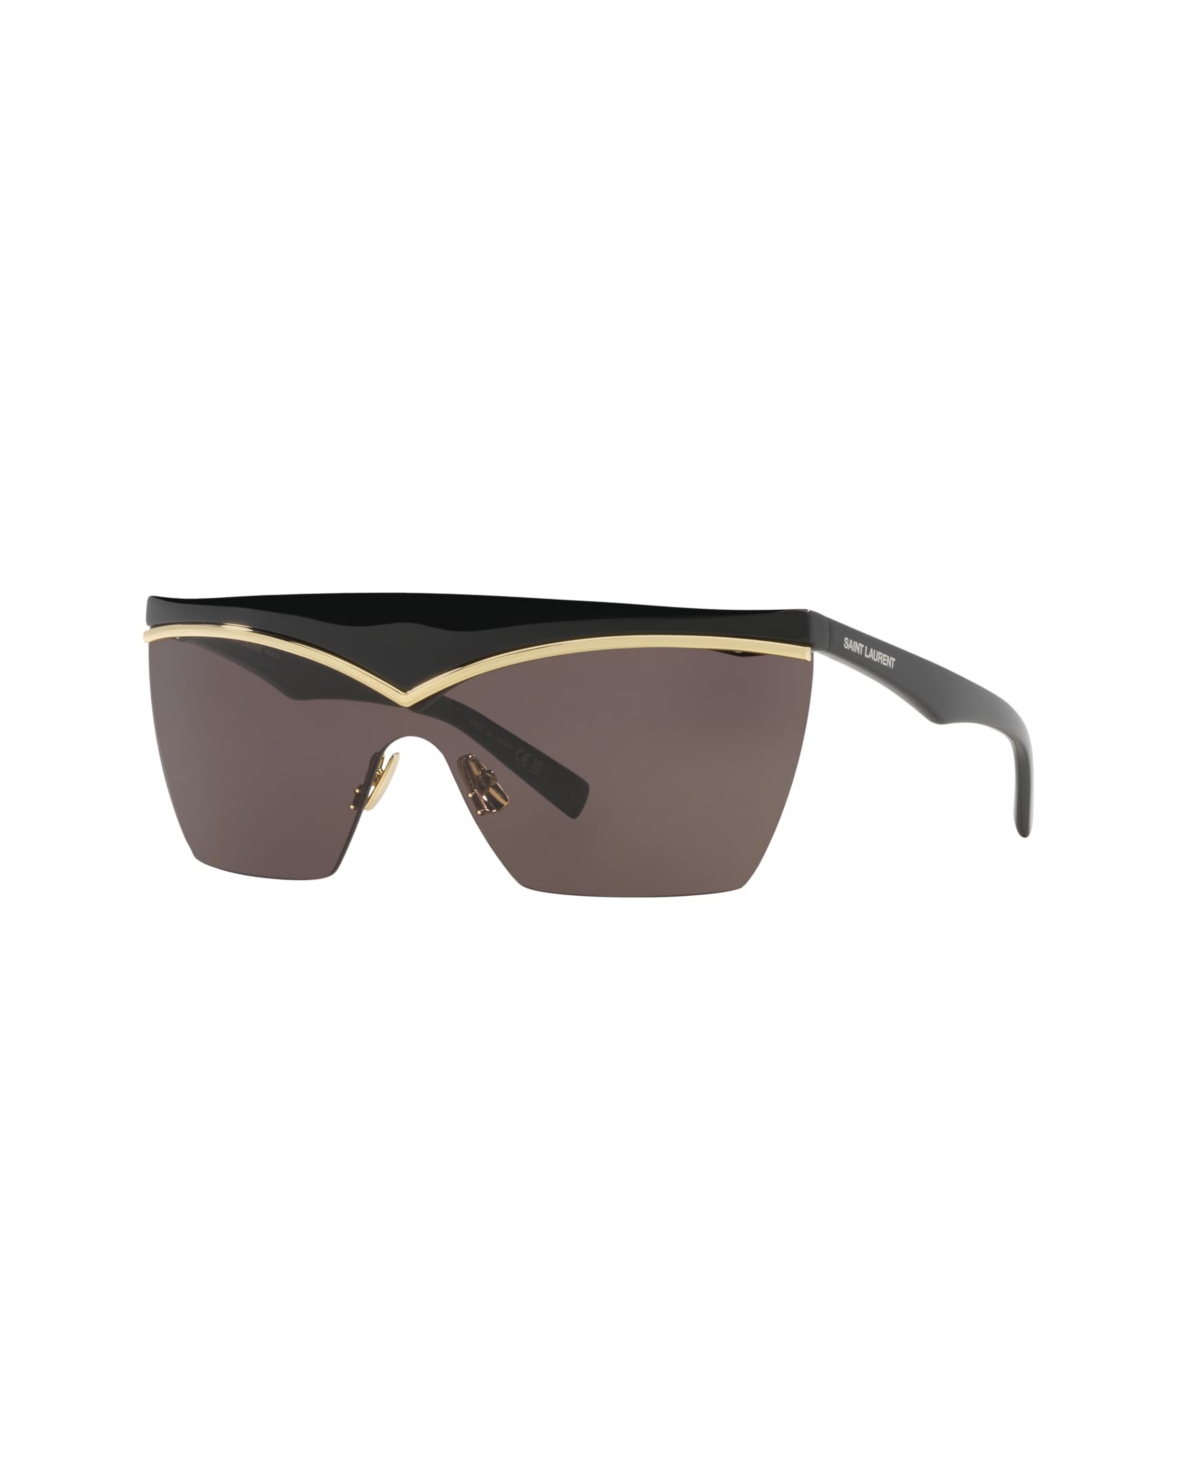 Women's Sunglasses, Sl 614 Mask Ys000527 - Black